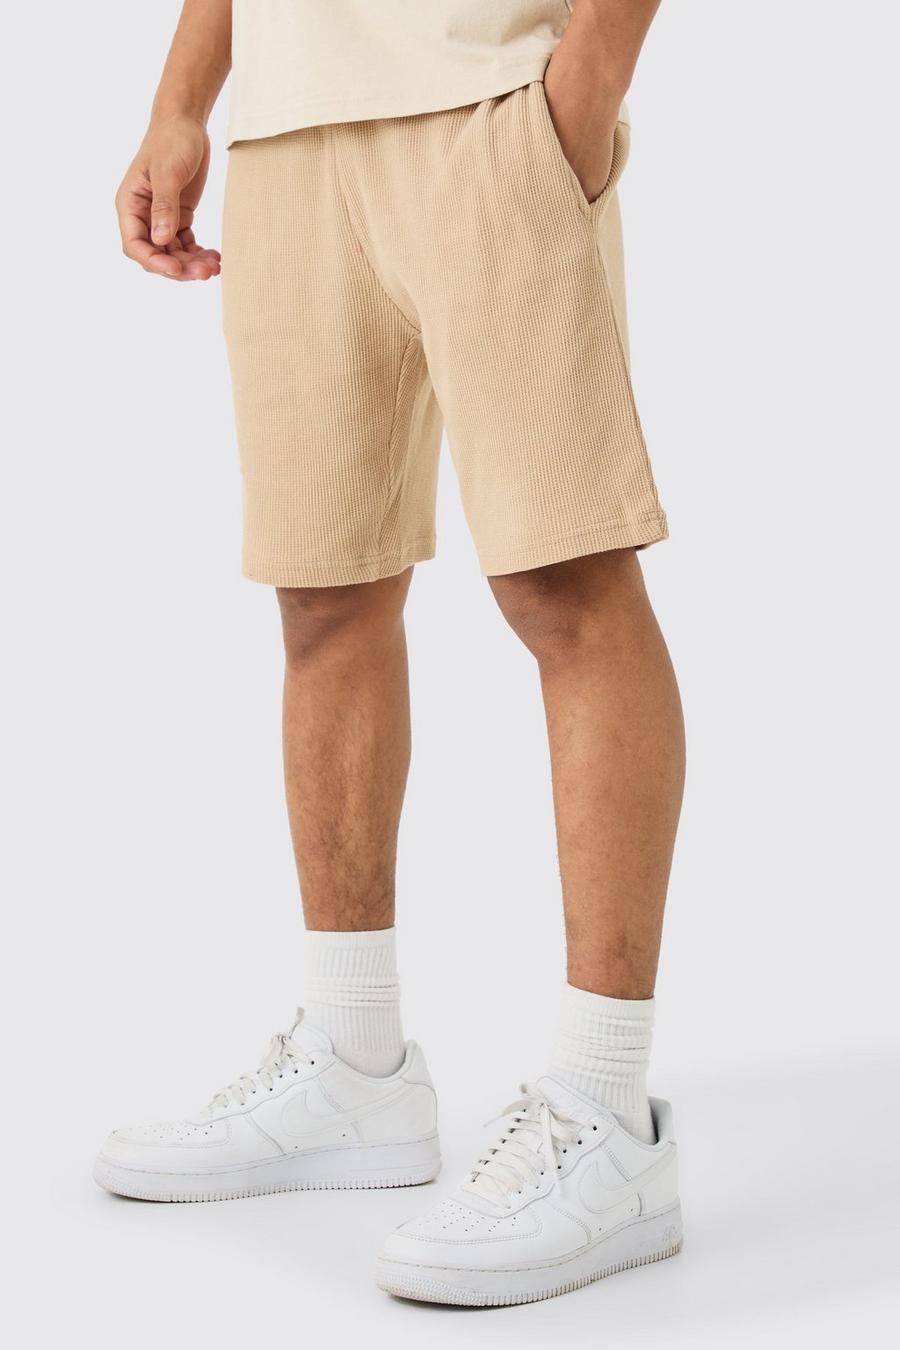 Stone Mellanlånga shorts i slim fit med våfflad struktur